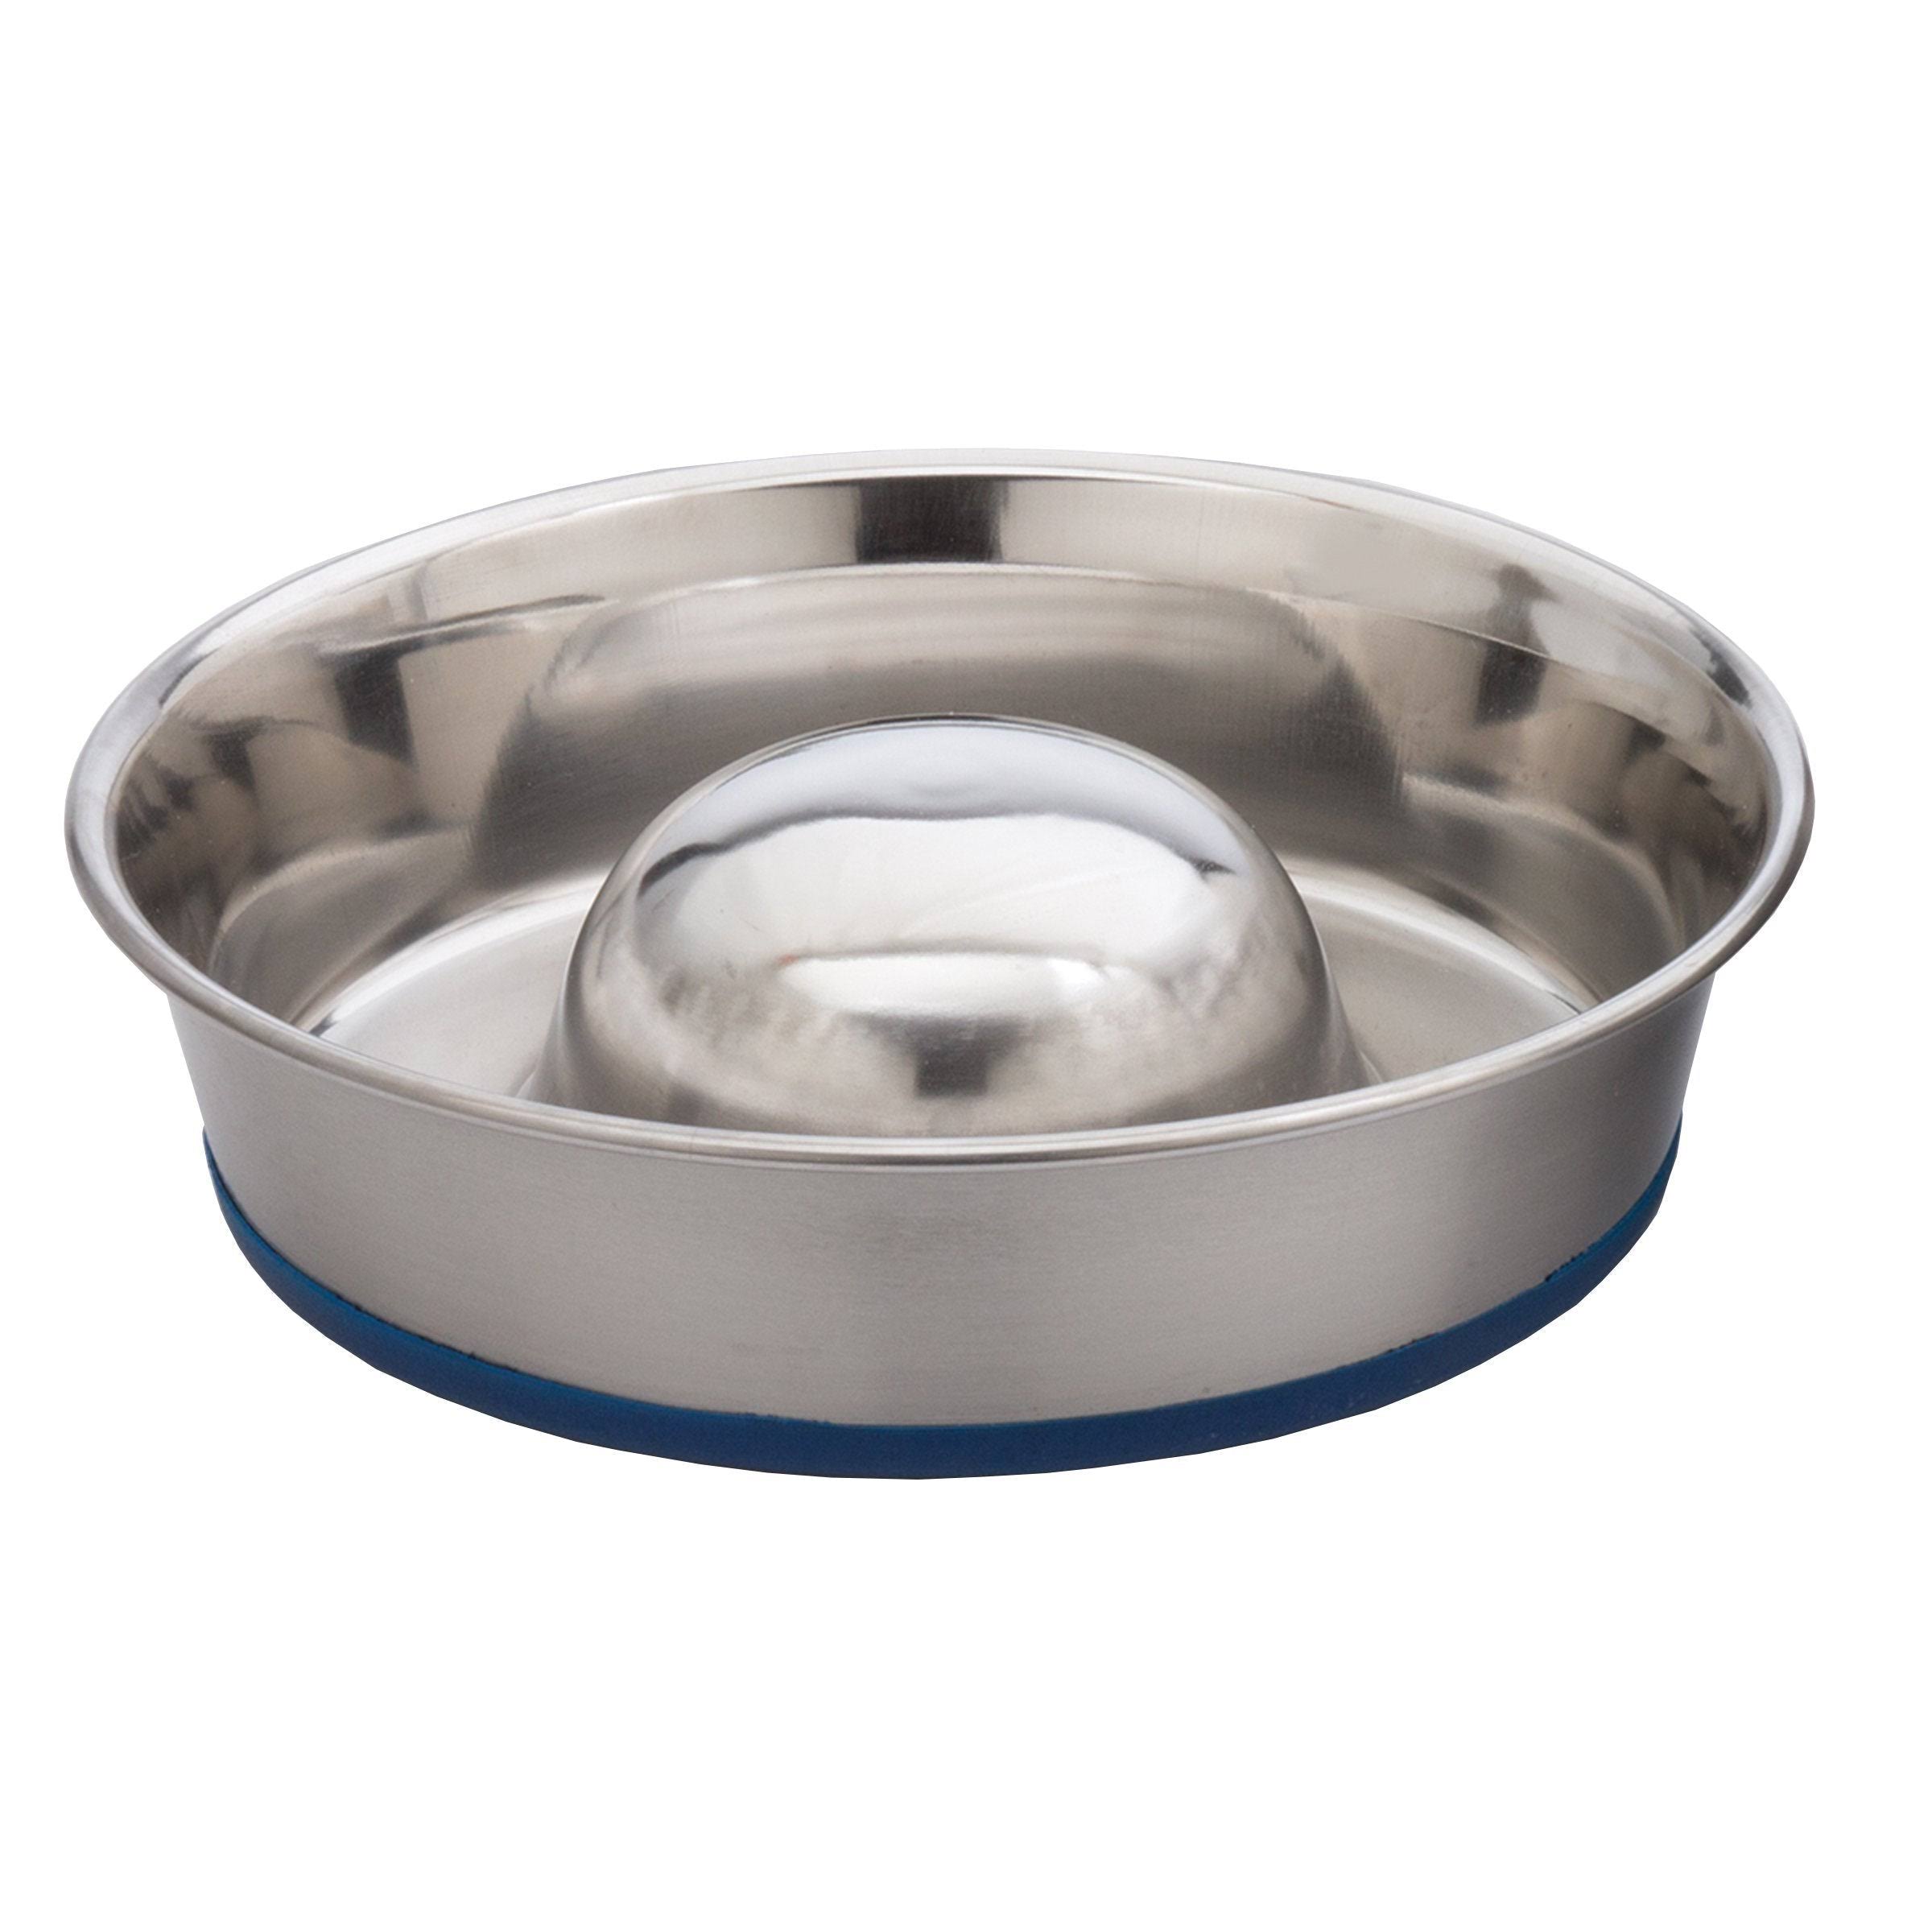 OurPet's Company Durapet Slow Feed Dog Bowl - Medium